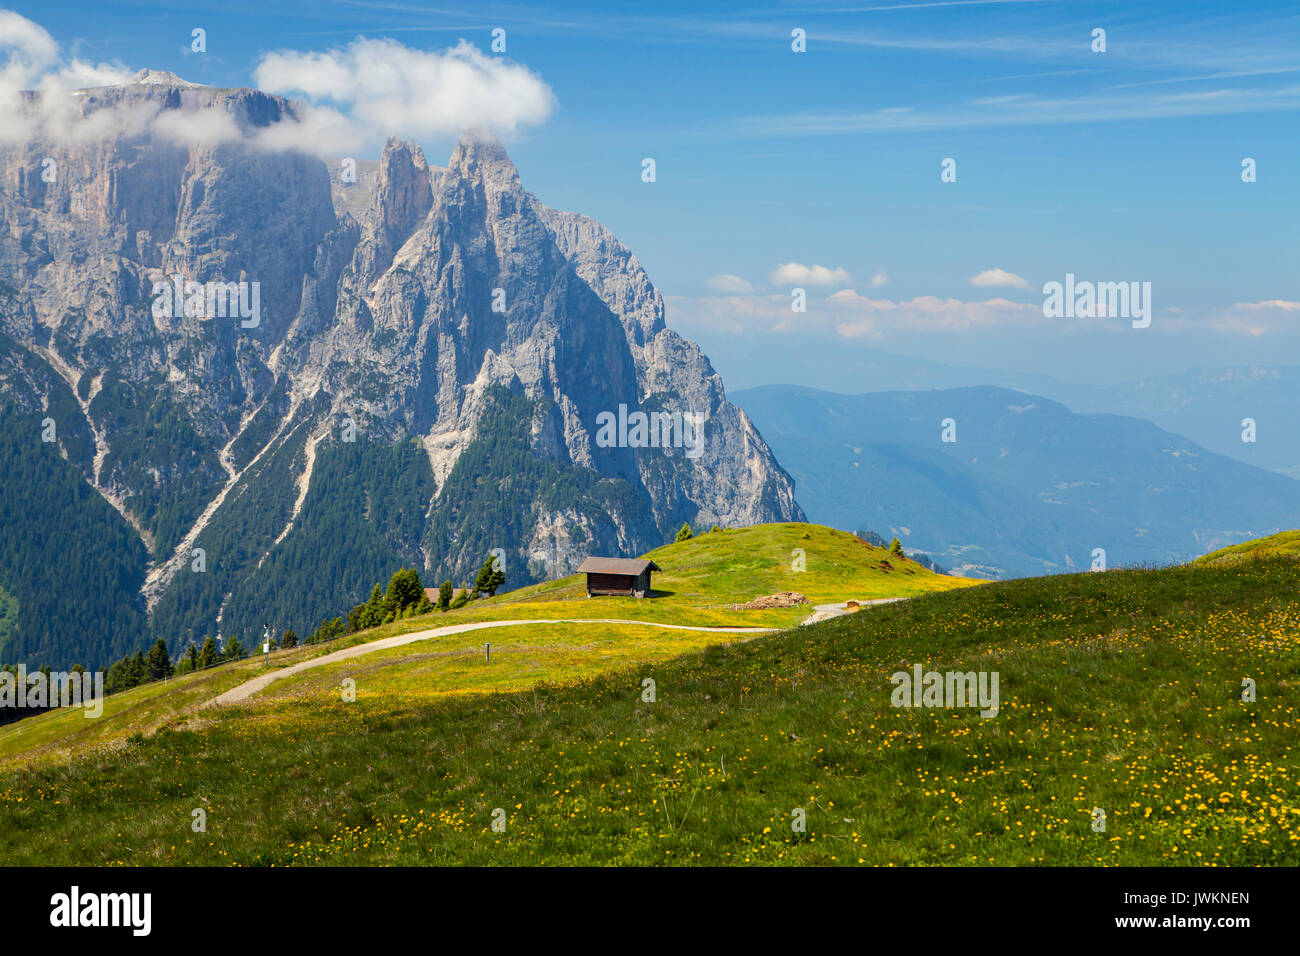 Alpe di siusi, Dolomites, Northern Italy Stock Photo